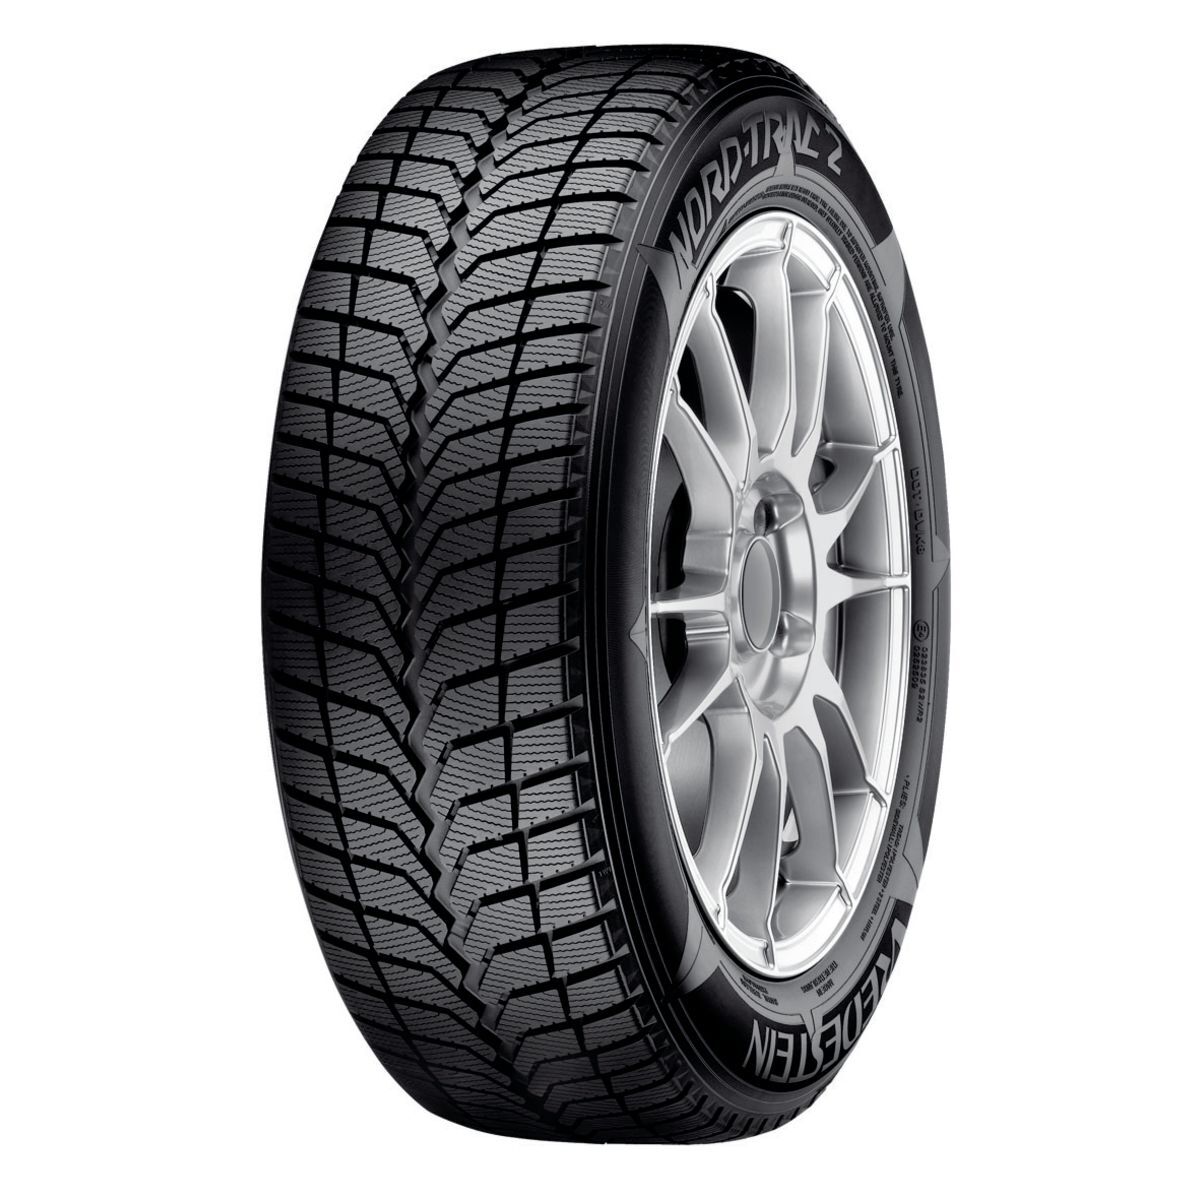 Neumáticos de invierno VREDESTEIN Nordtrac 2 215/55R17 XL 98T